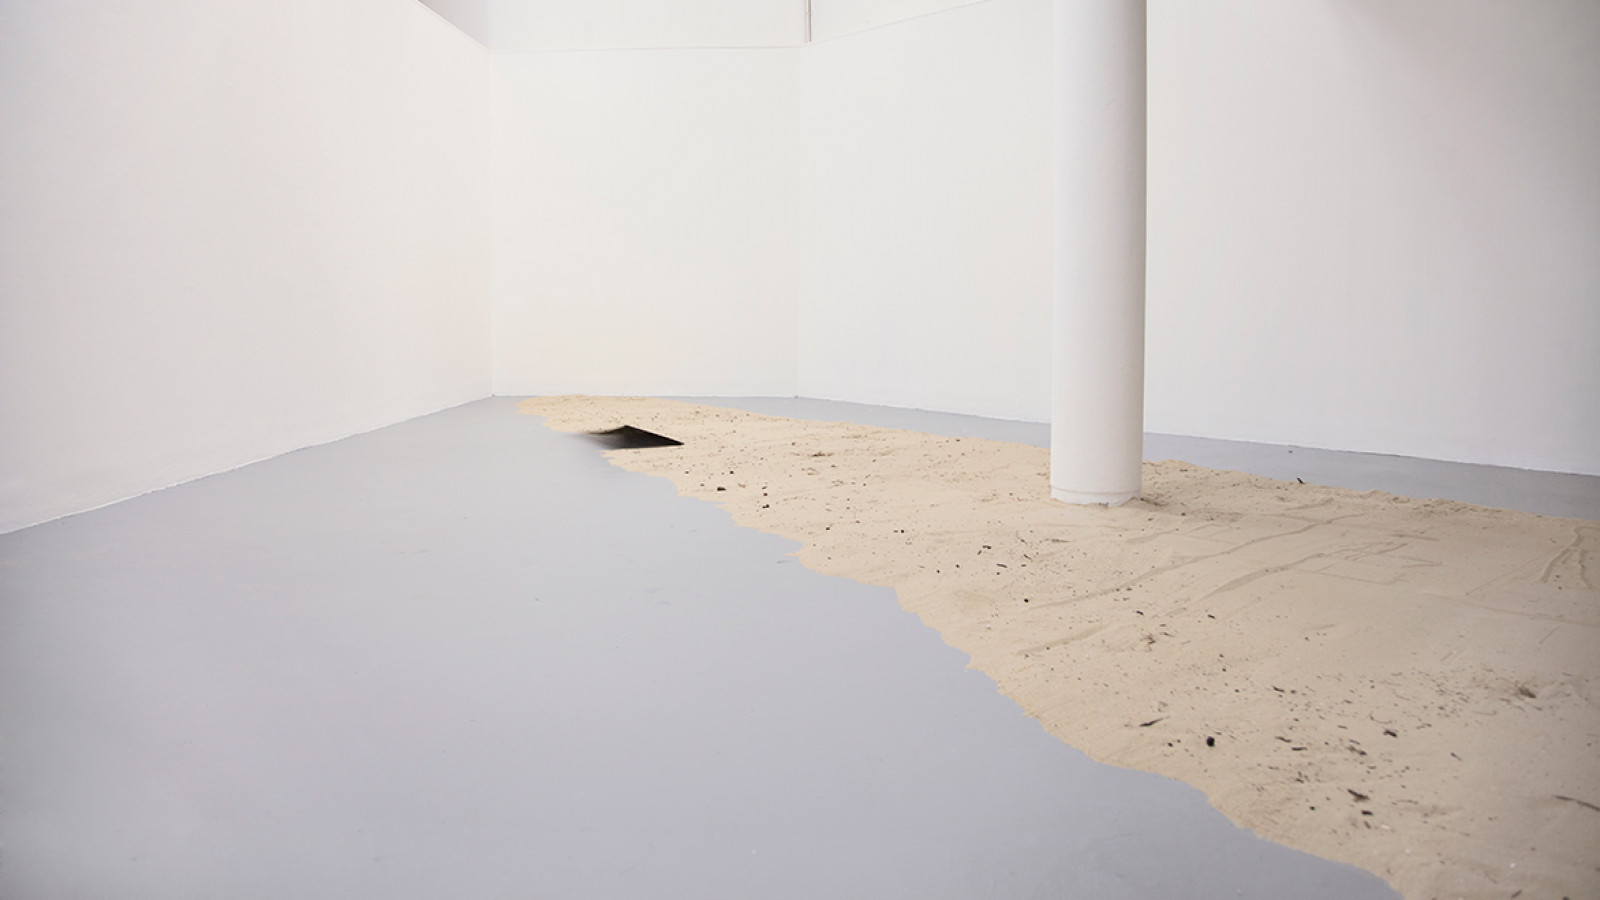 Ángela Jiménez, Bajo la arena (Under the sand), 2019